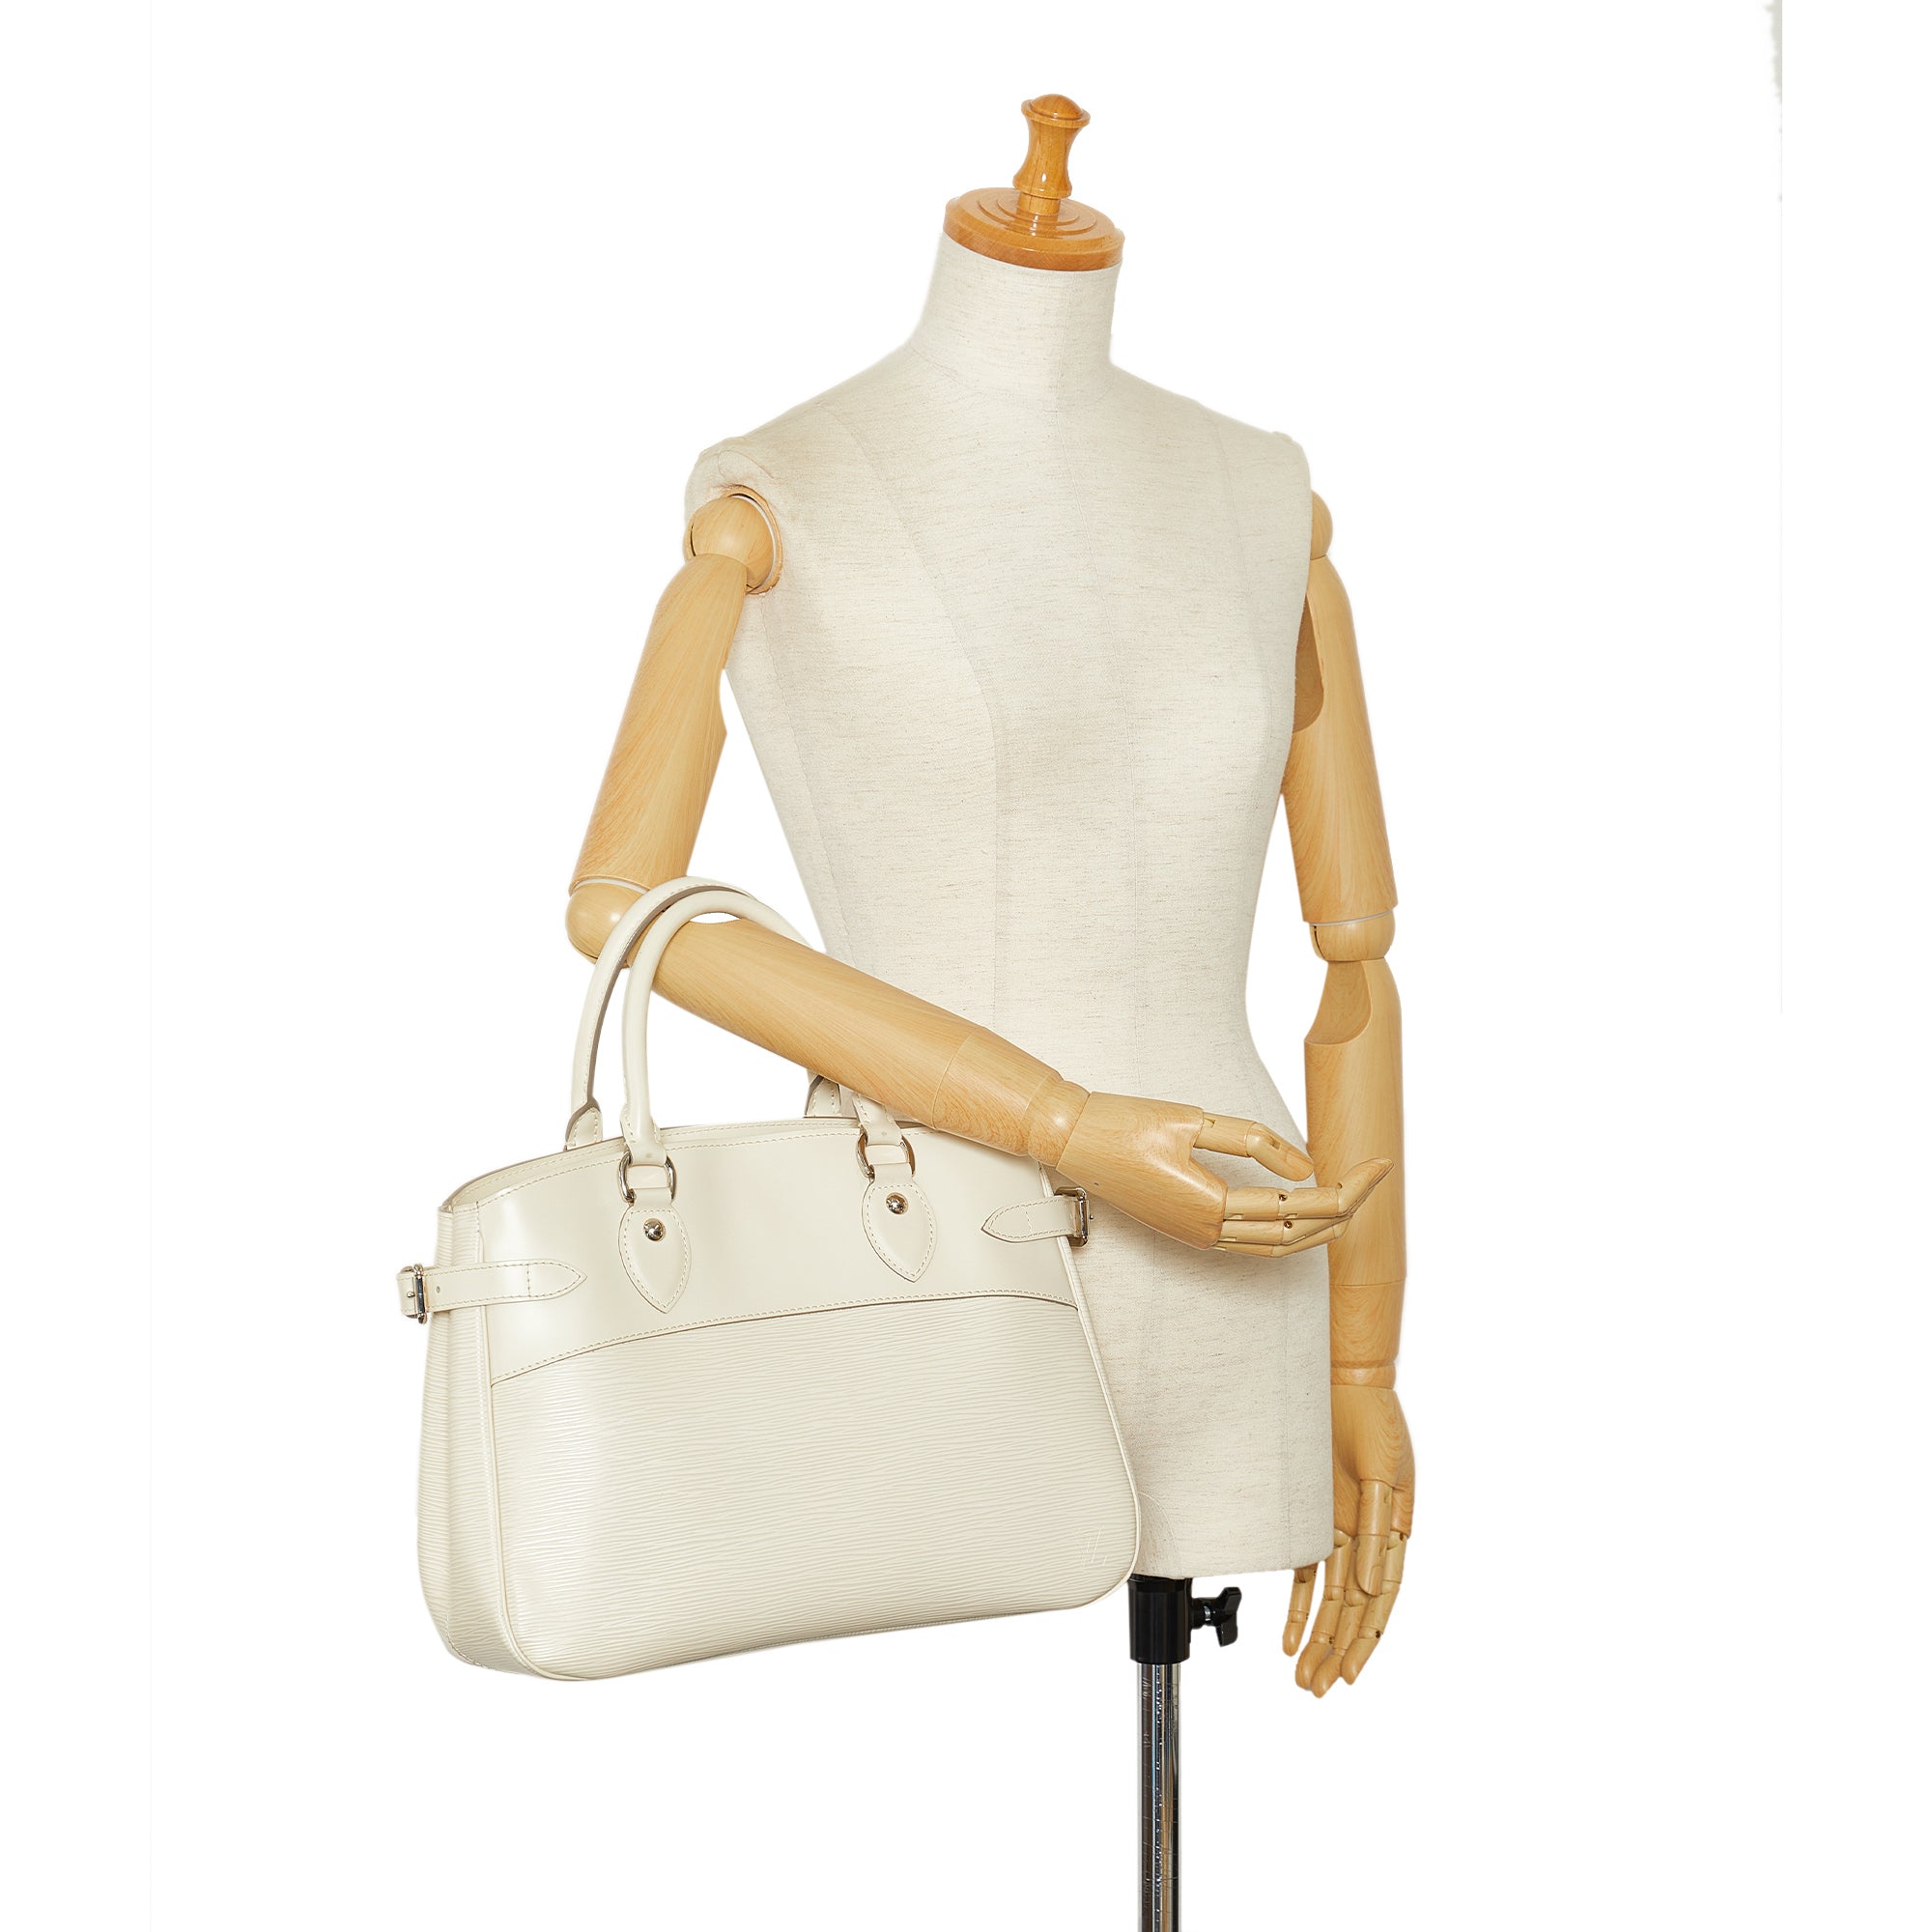 White Louis Vuitton Epi Passy PM Handbag